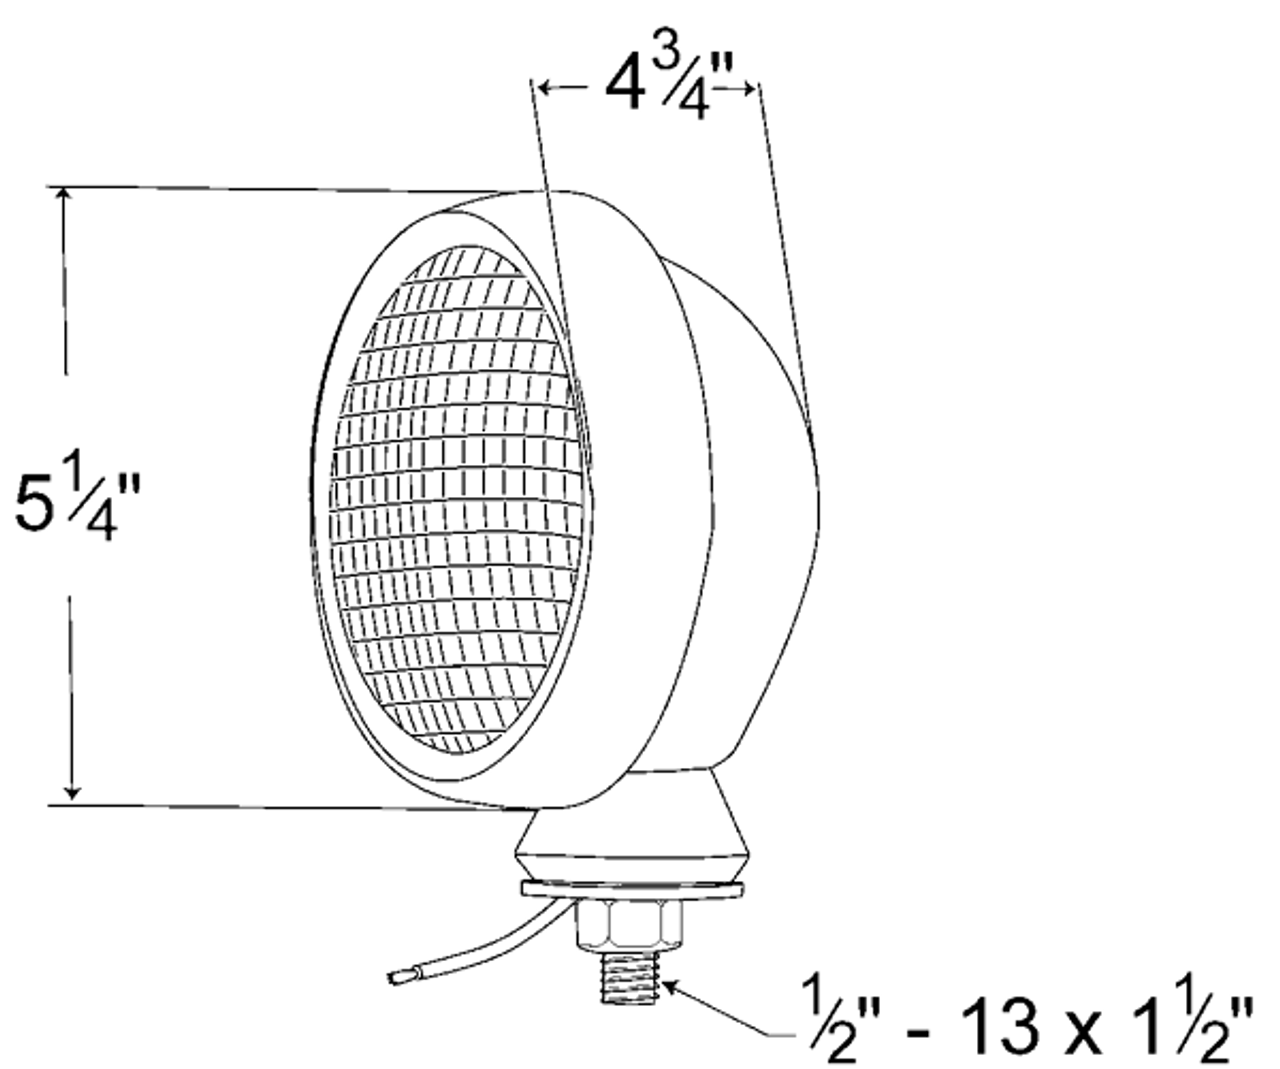 Par 36 3000 Lumen - Trapezoid Beam Utility Lamp - Clear  64441